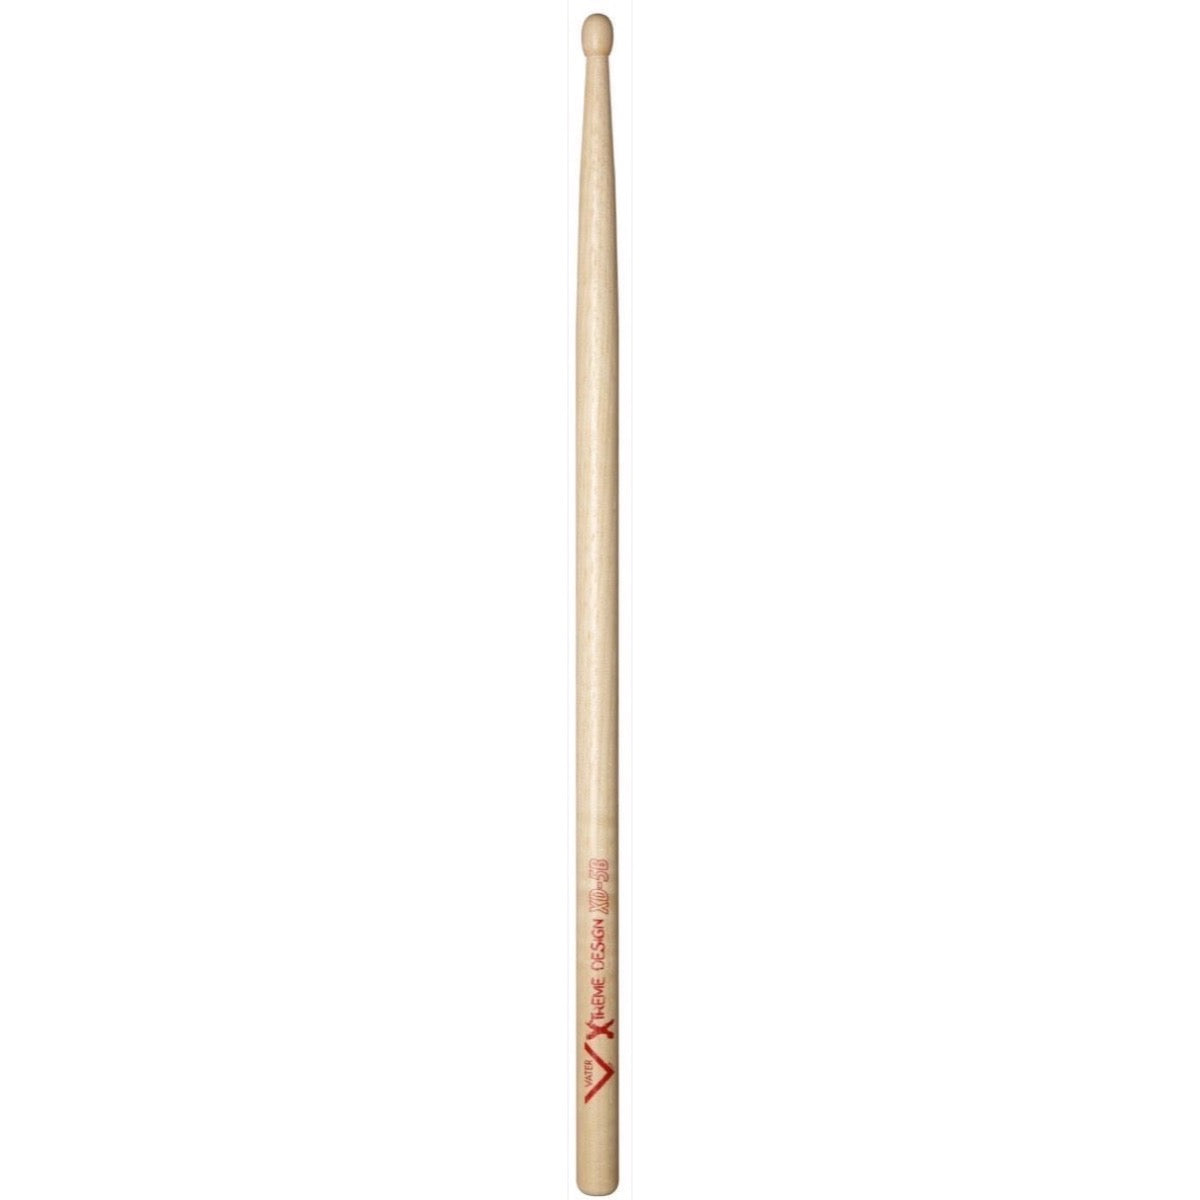 Vater Xtreme Design Hickory Drumsticks (Pair), Wood Tip, 5A